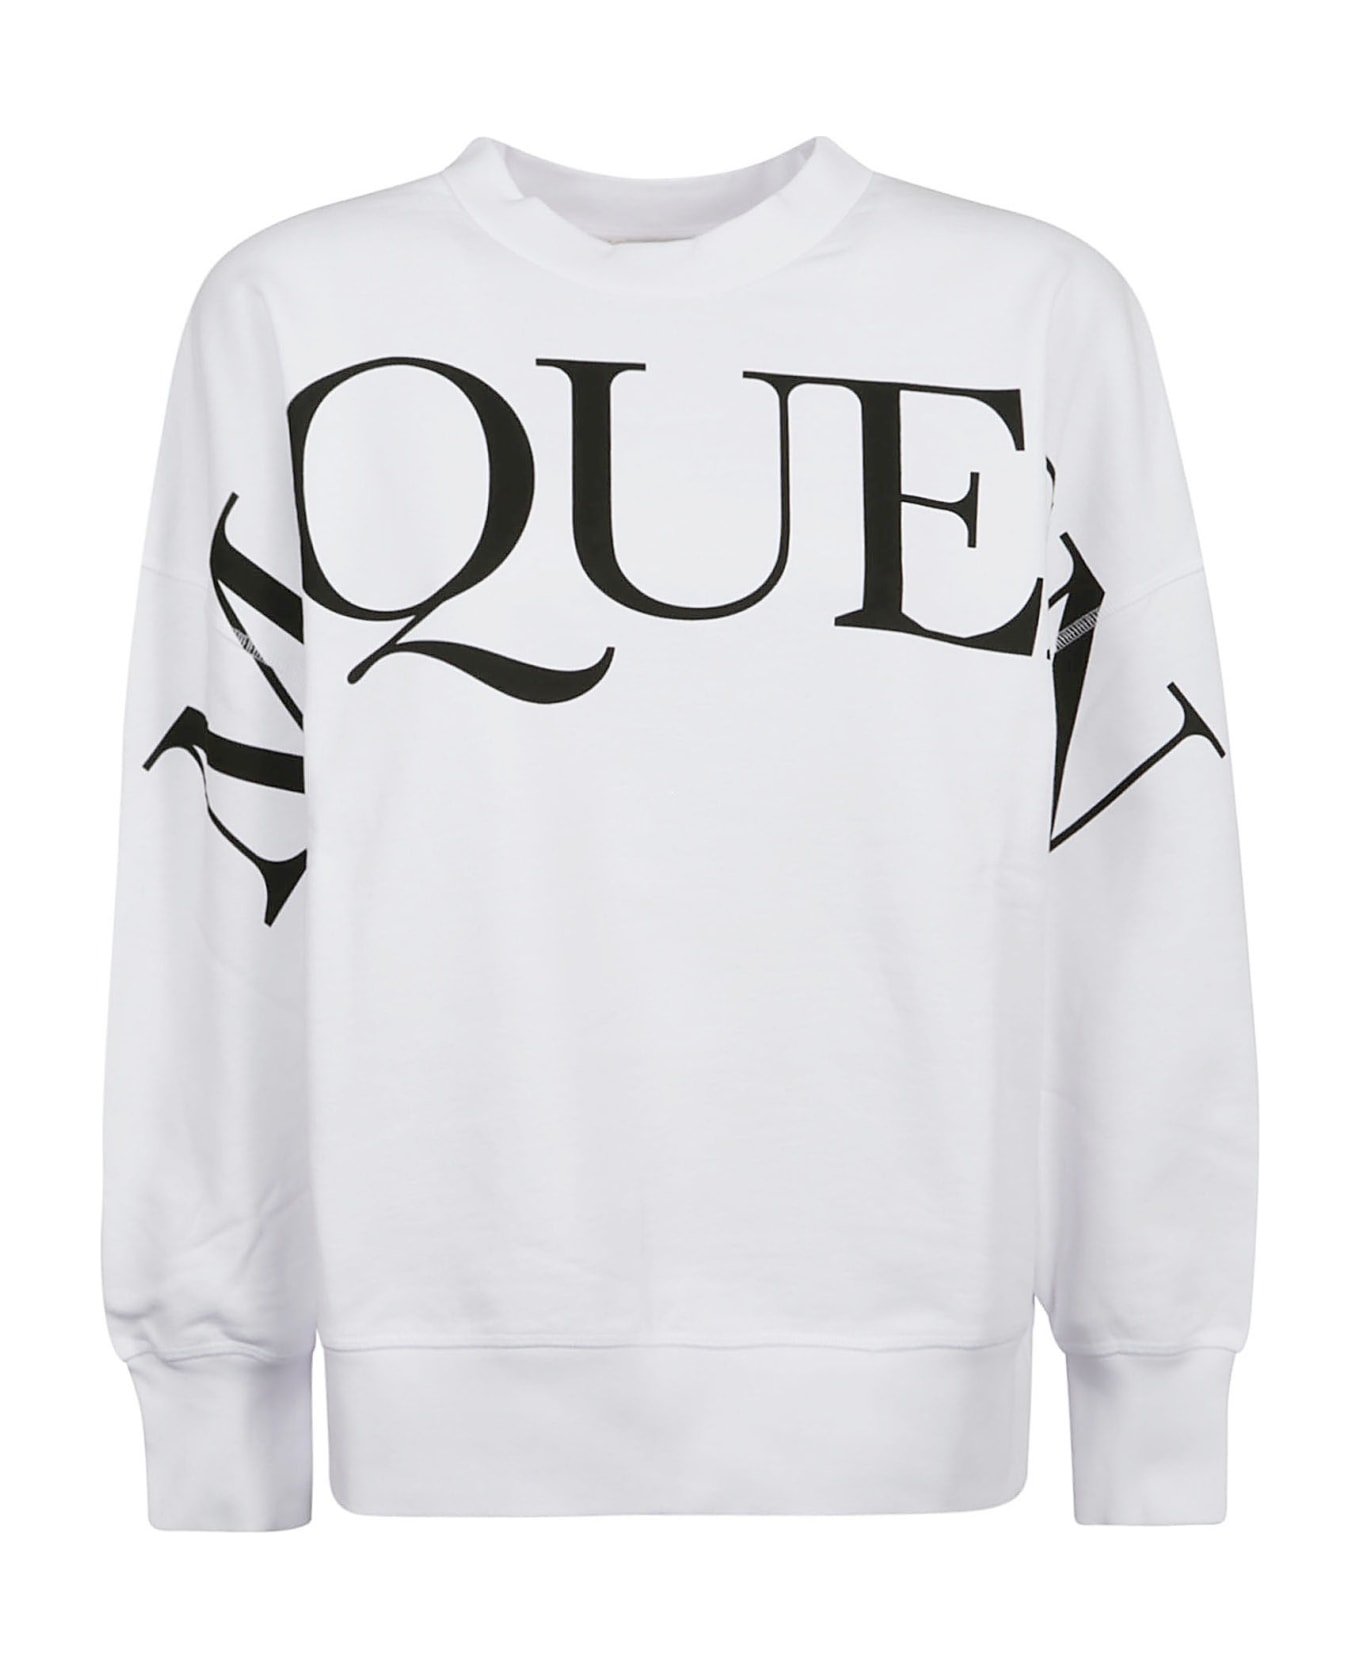 Alexander McQueen Oversized Logo Sweatshirt - White/Black